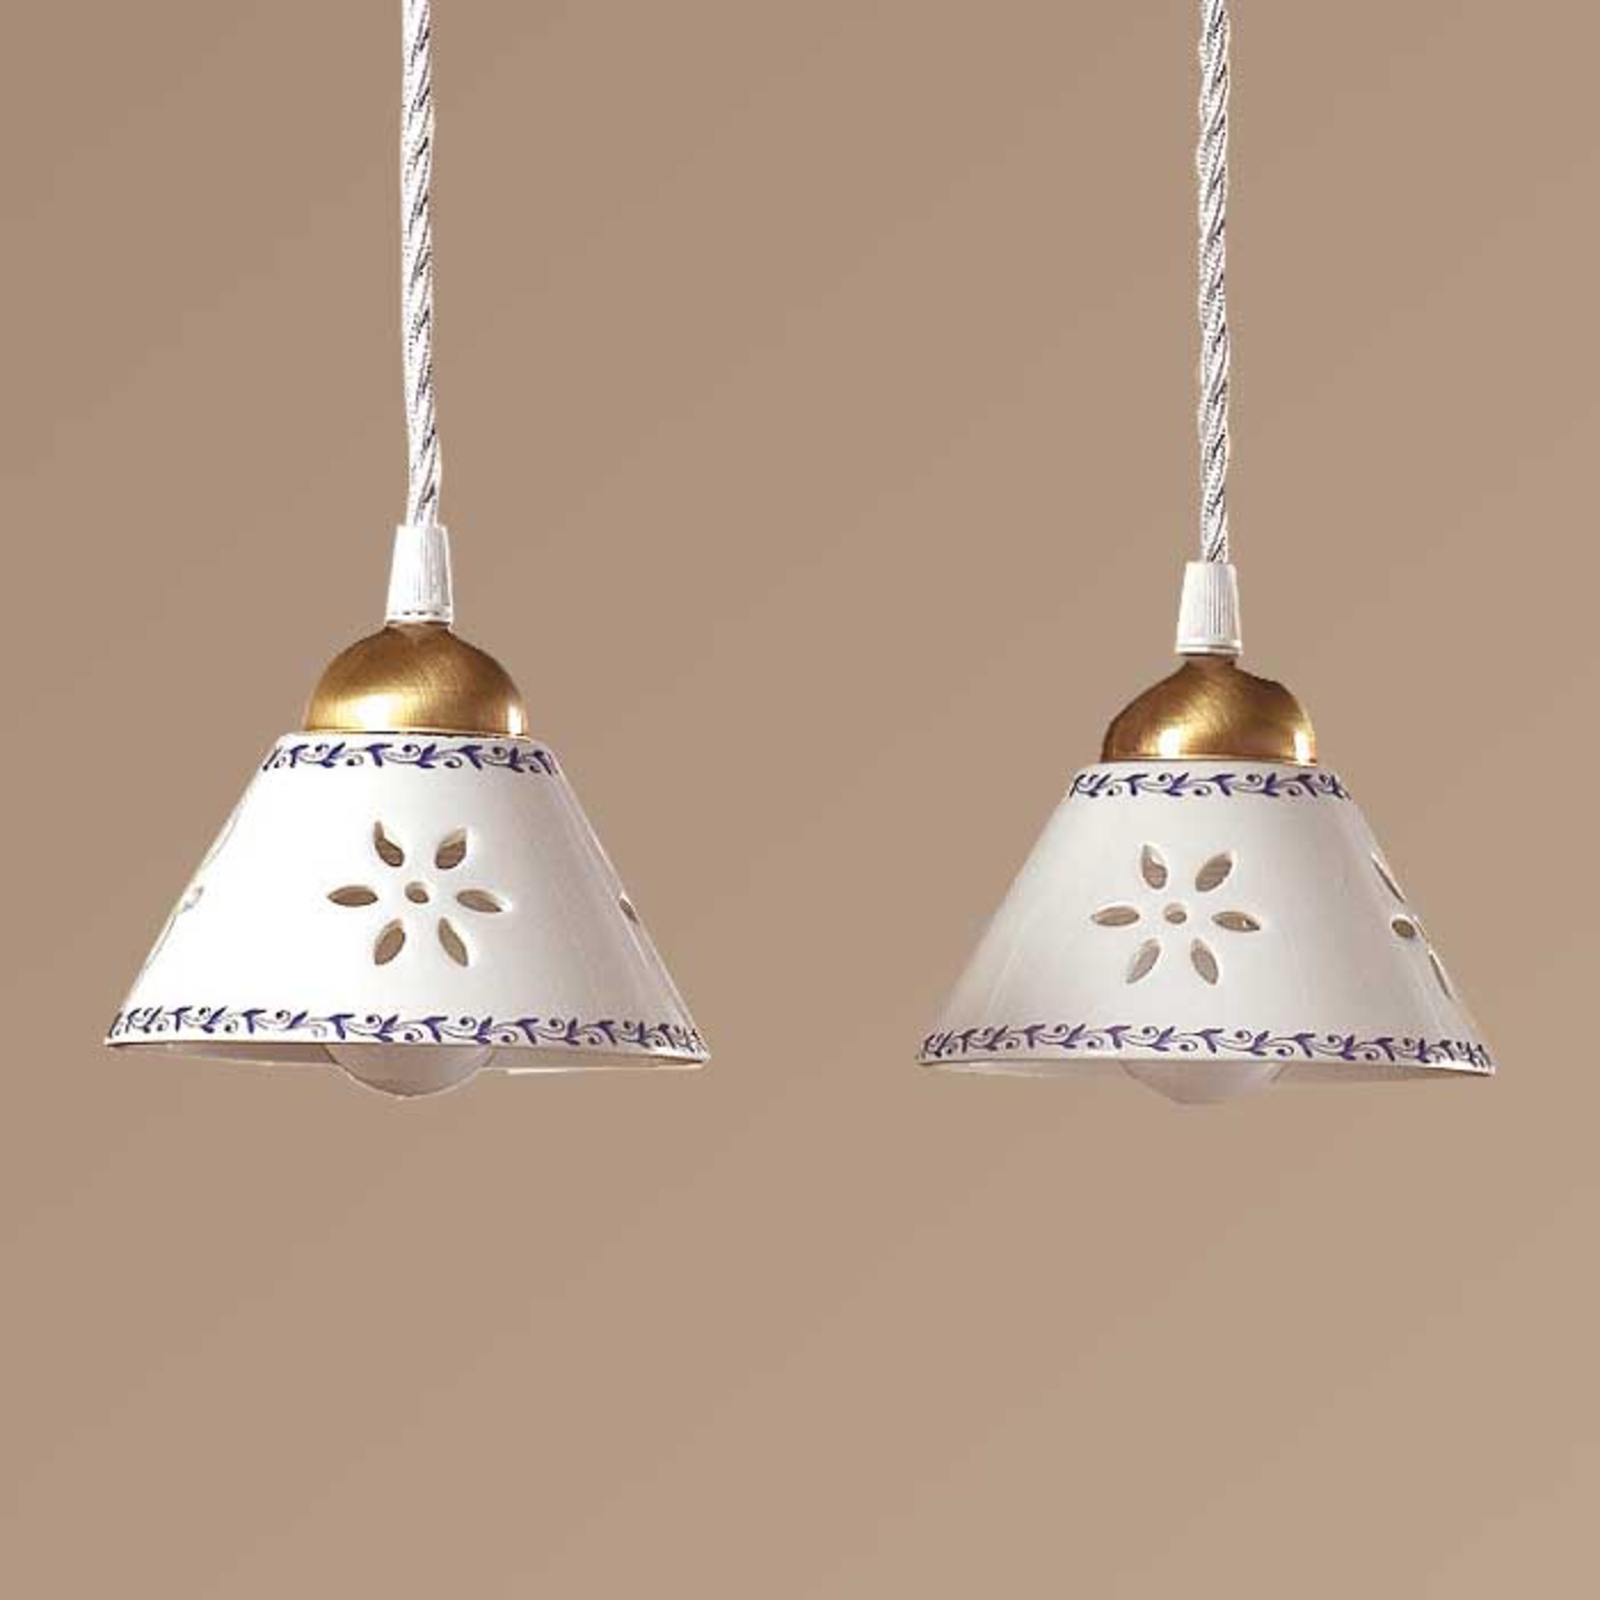 2-bulb NONNA hanging light, made of white ceramic